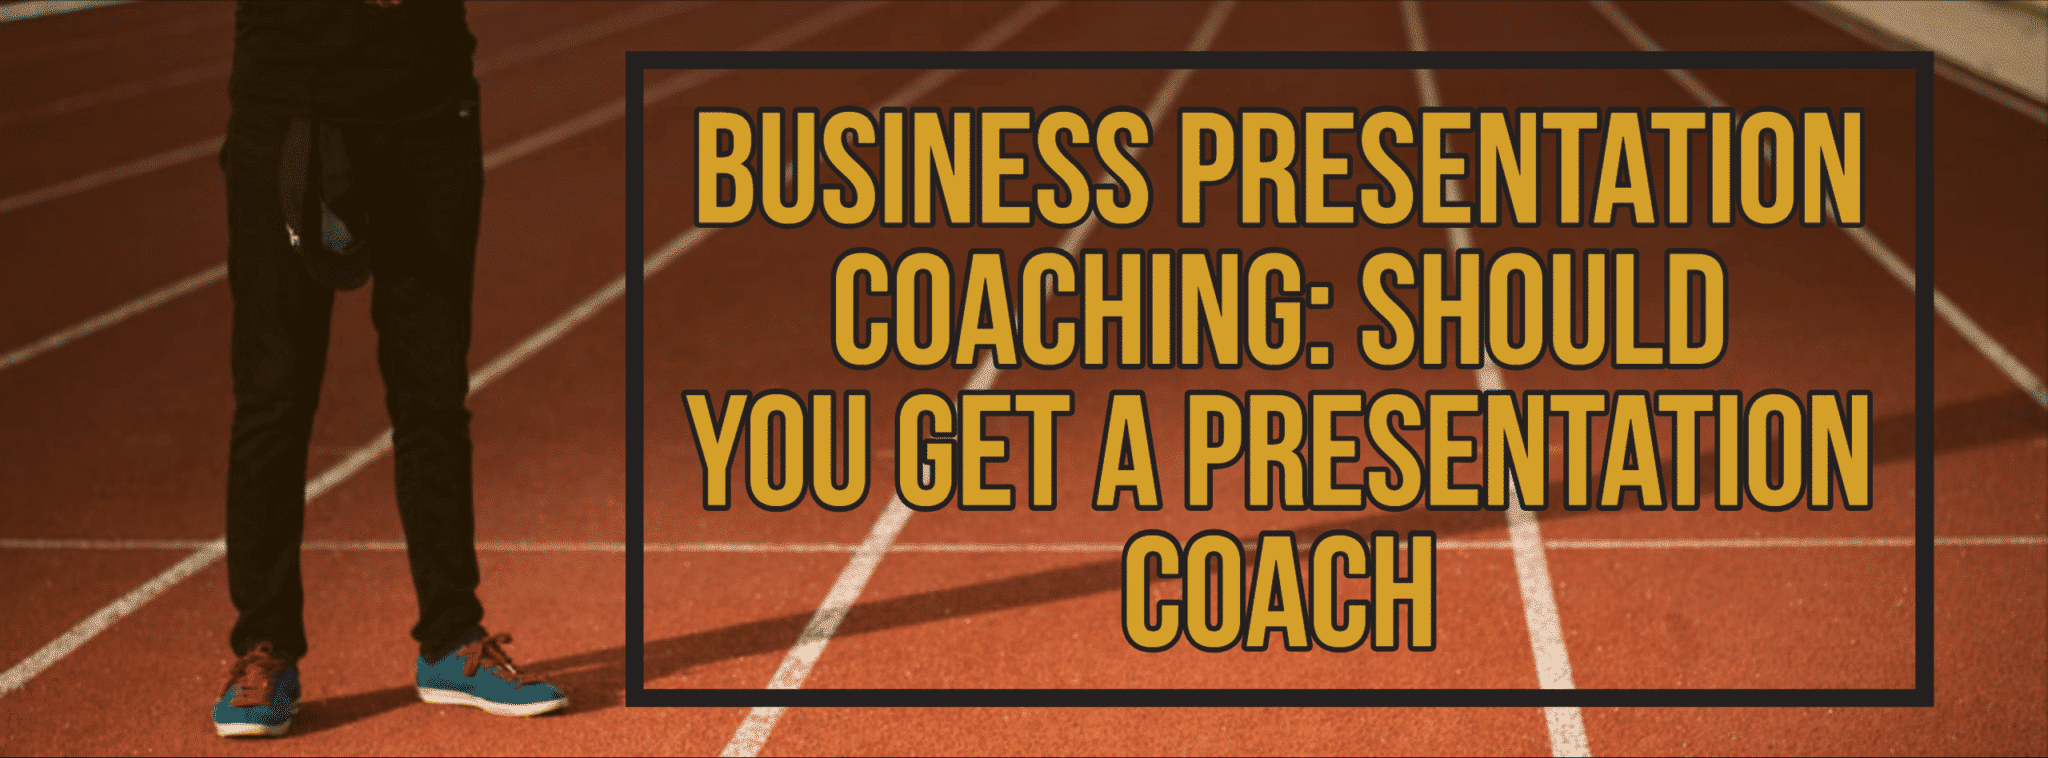 Business Presentation Coaching_ Should You Get a Presentation Coach_